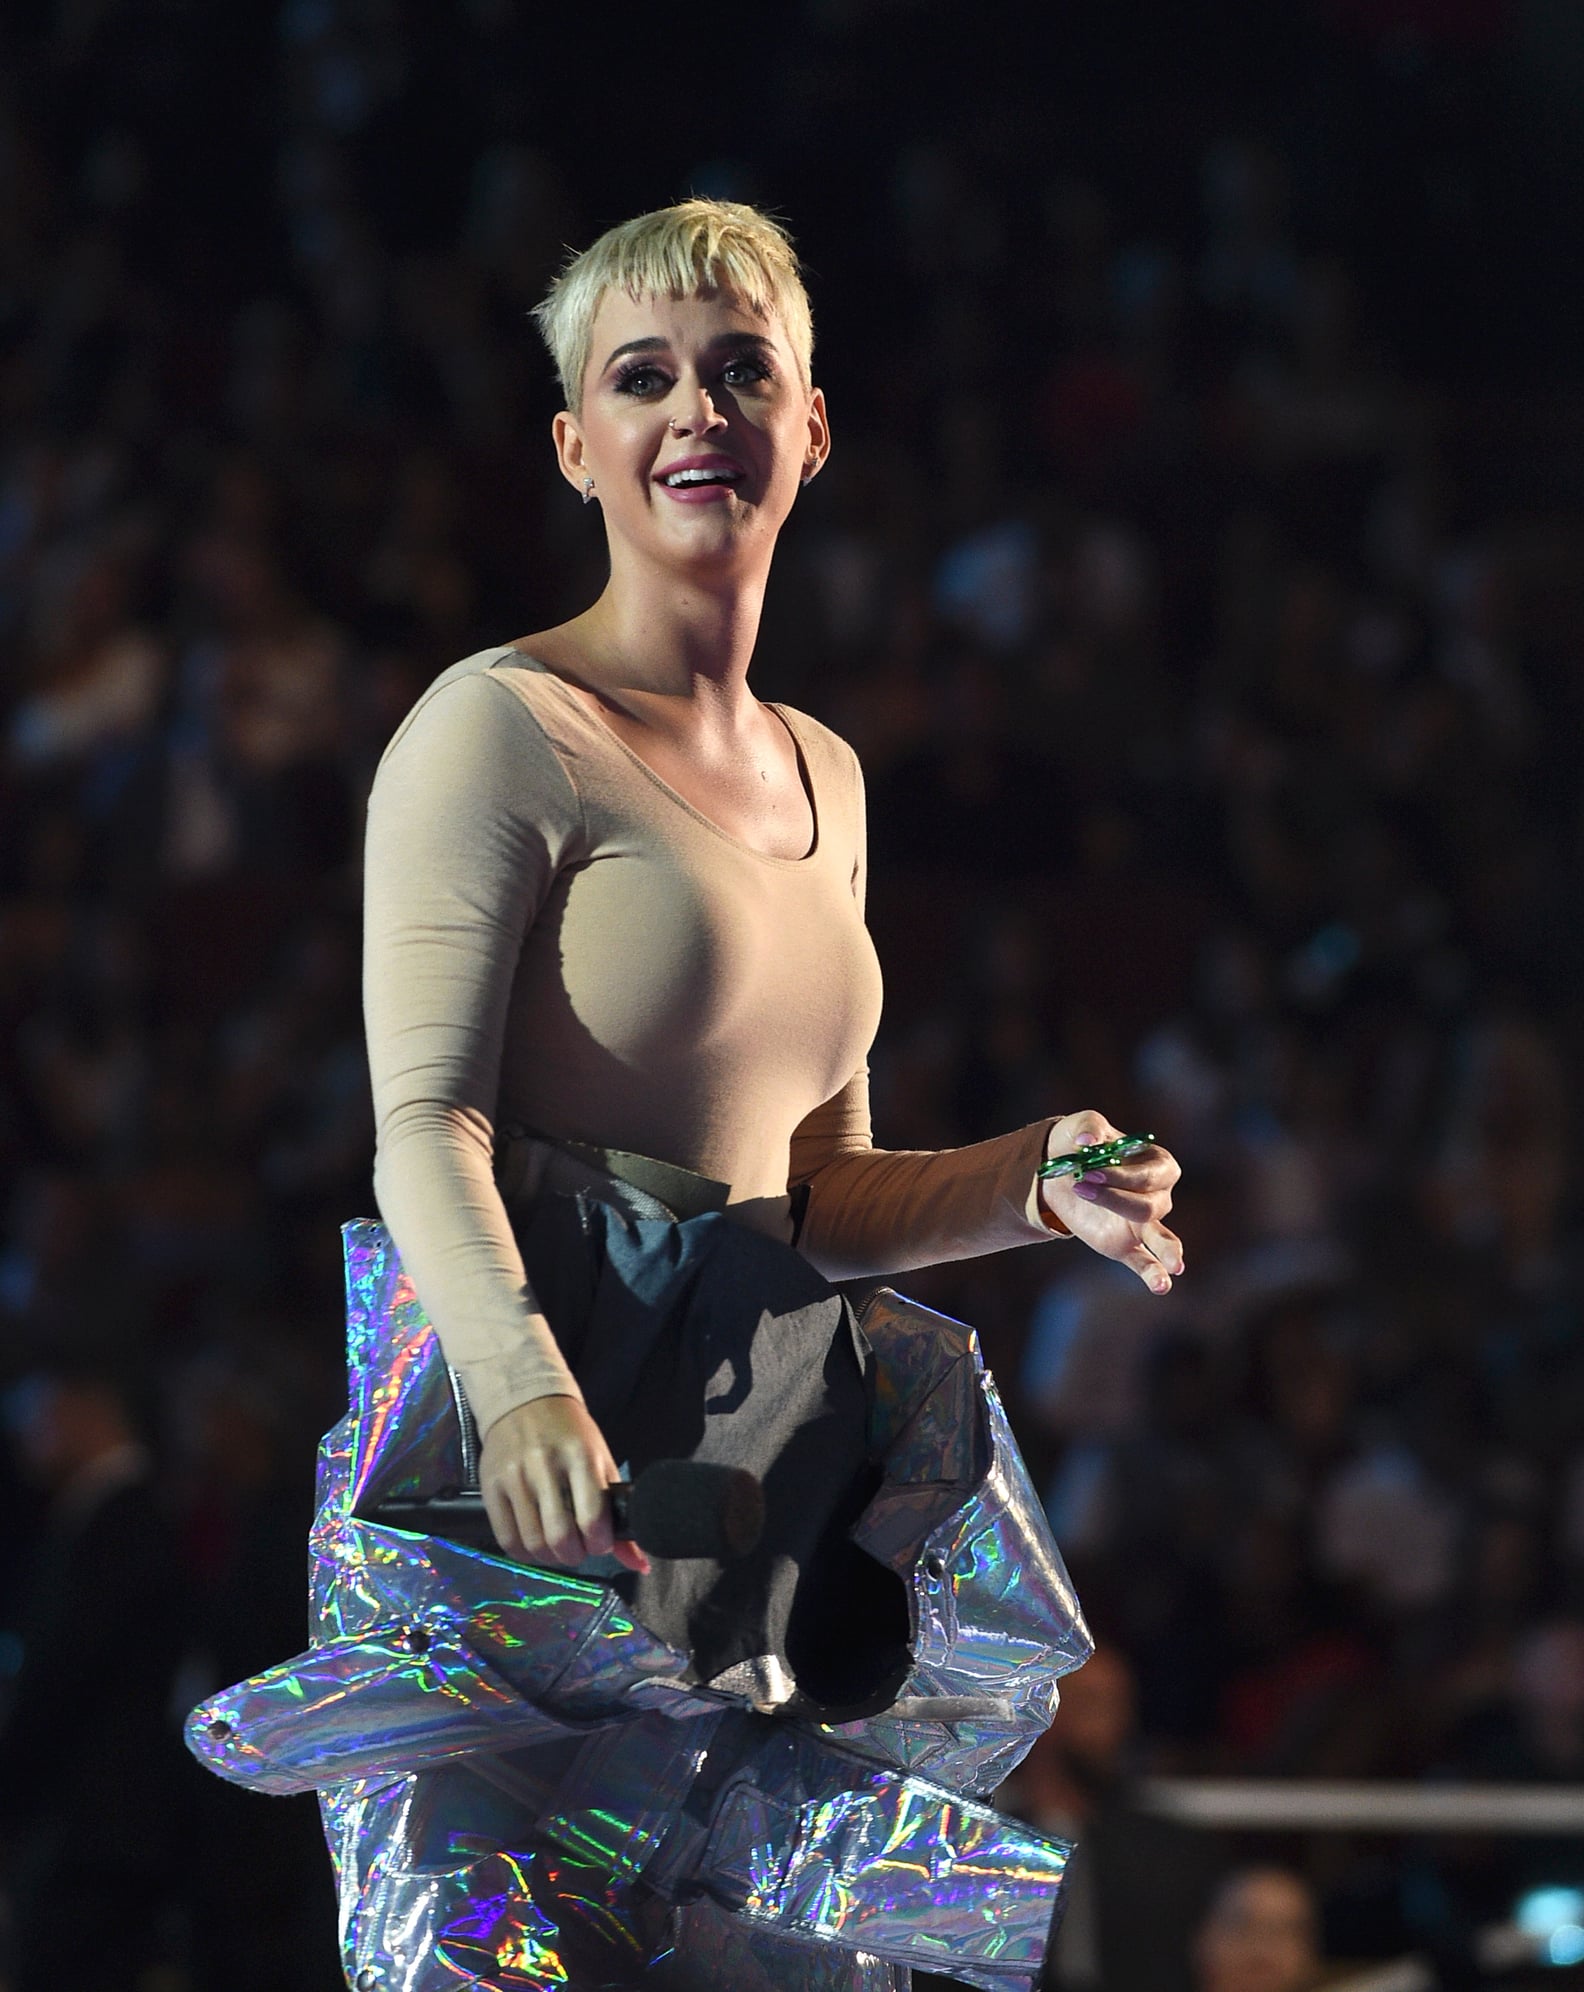 Katy Perry at 2017 MTV VMAs | POPSUGAR Celebrity